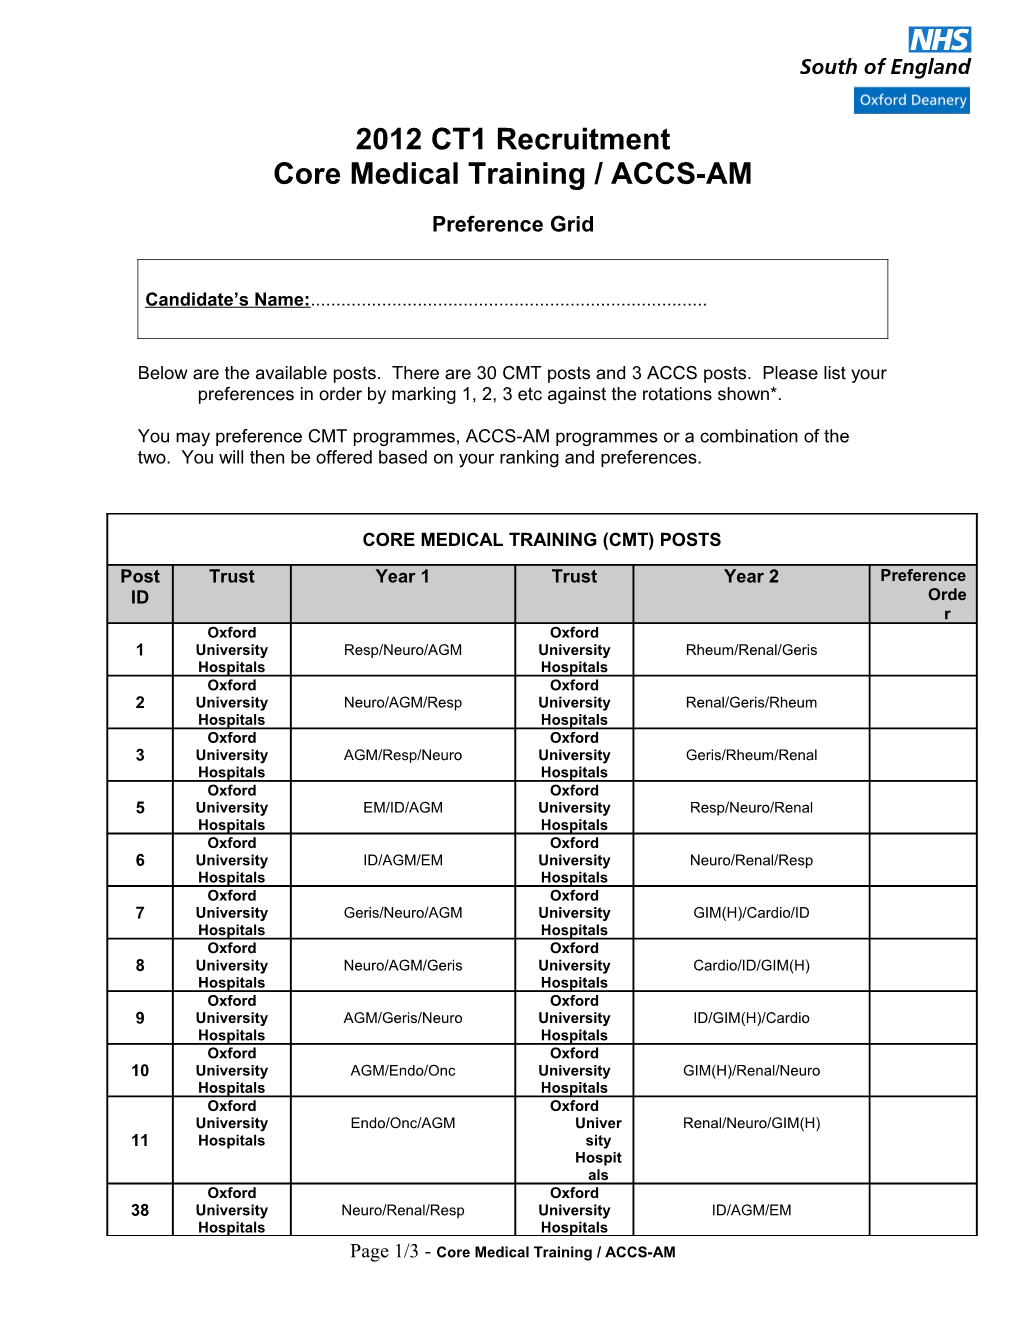 Core Medical Training / ACCS-AM